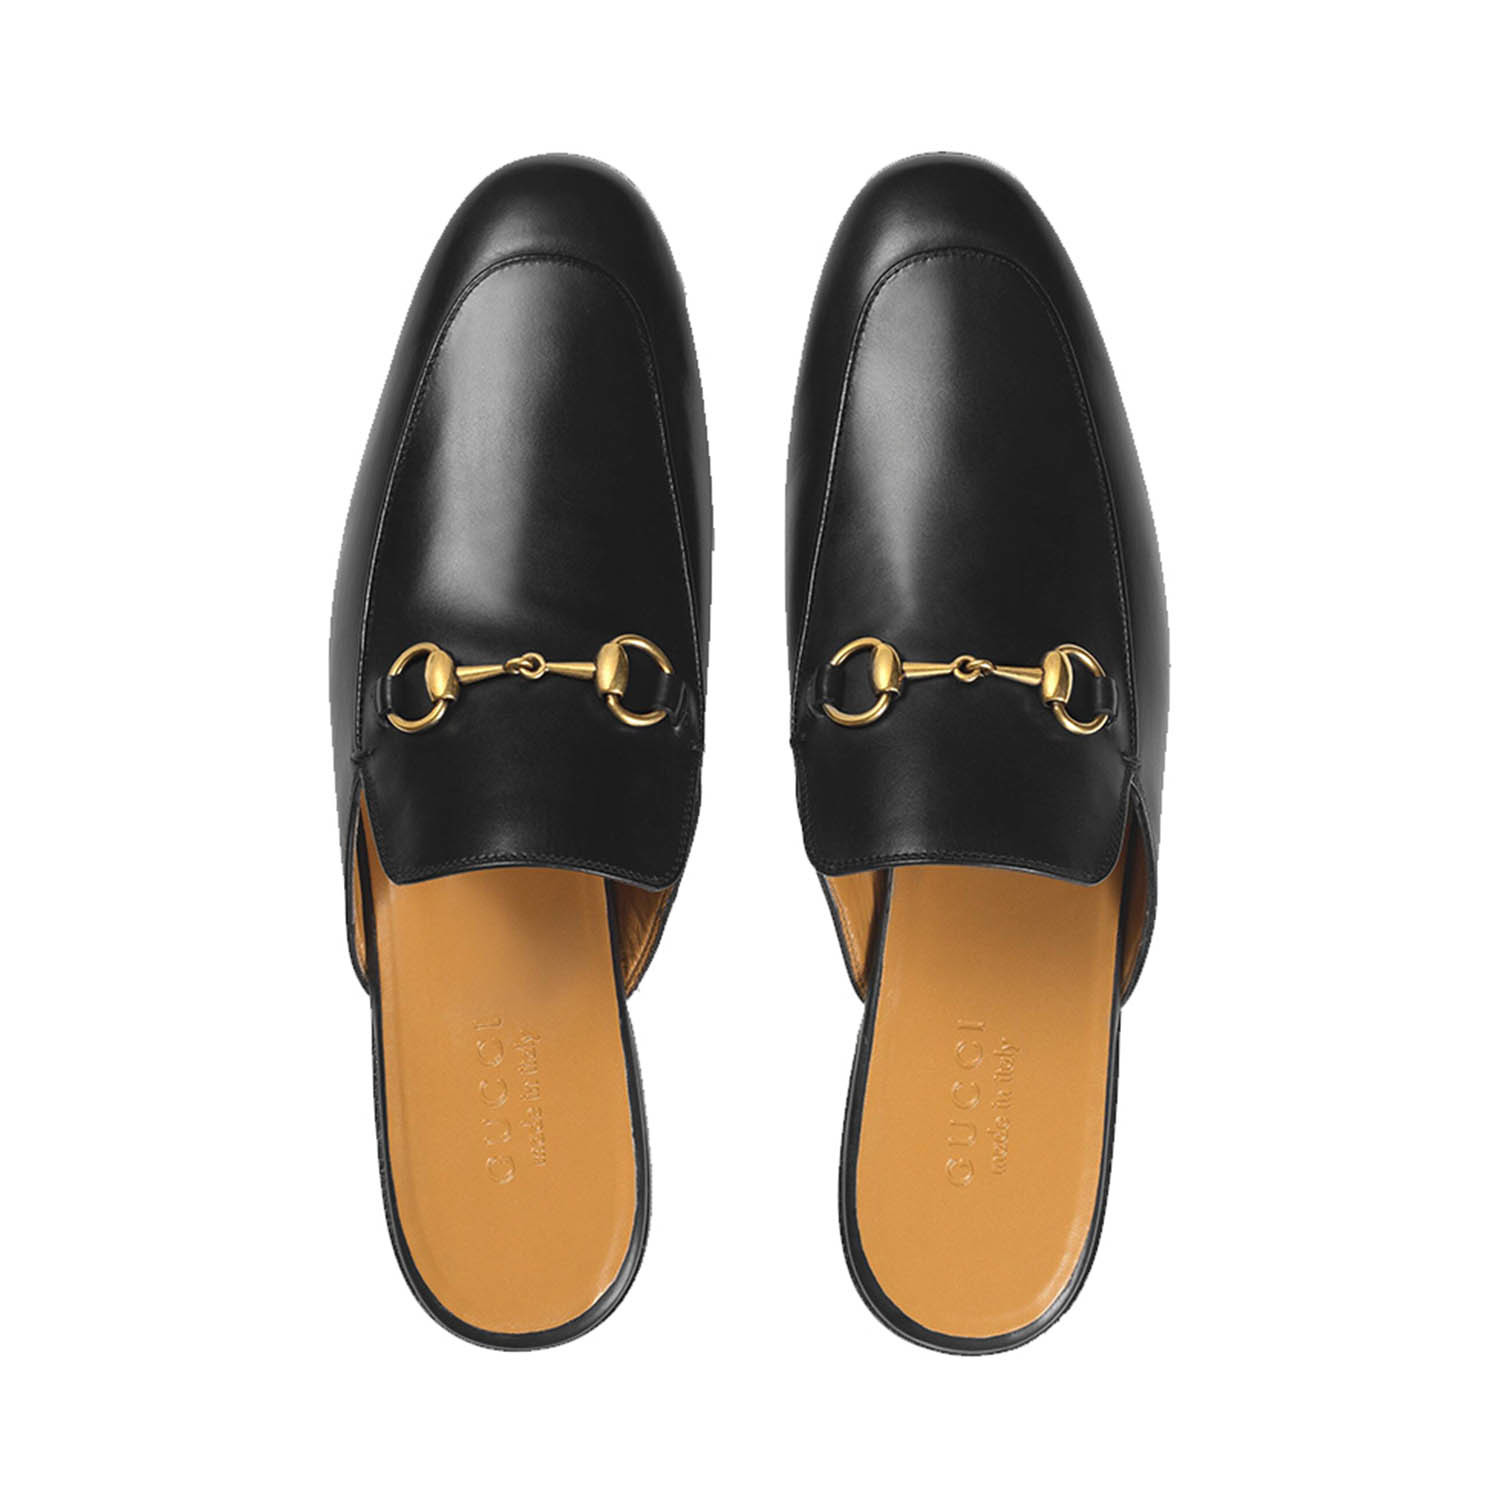 Gucci // Leather Horsebit Slipper Loafer Shoes // Black (US 7) - Men's ...